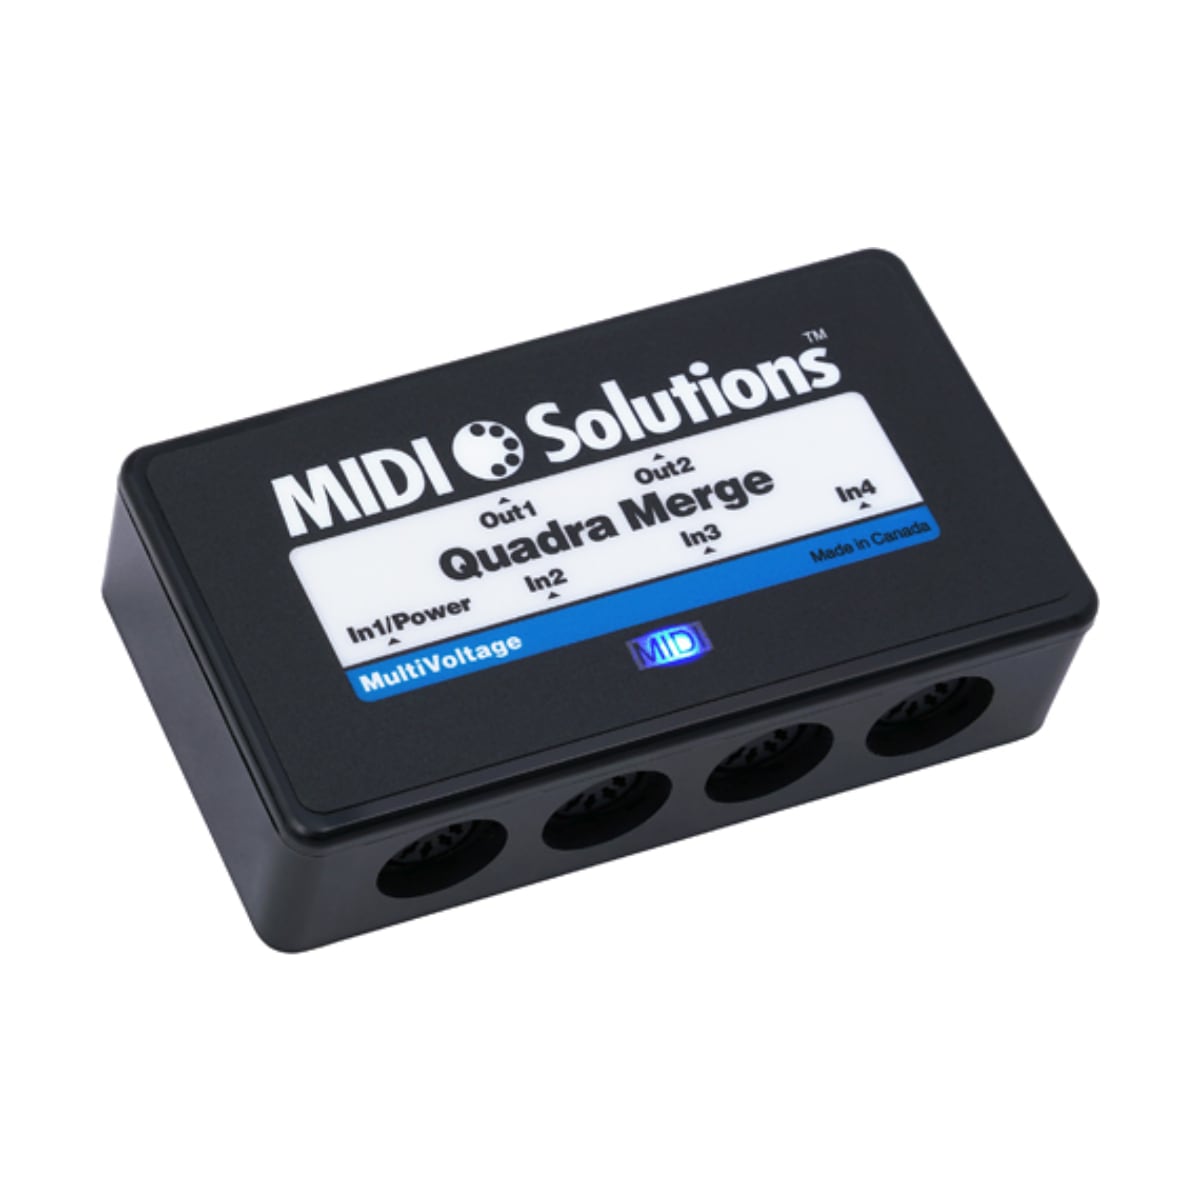 MIDI SOLUTIONS 4 OUTPUT MERGE BOX Main View